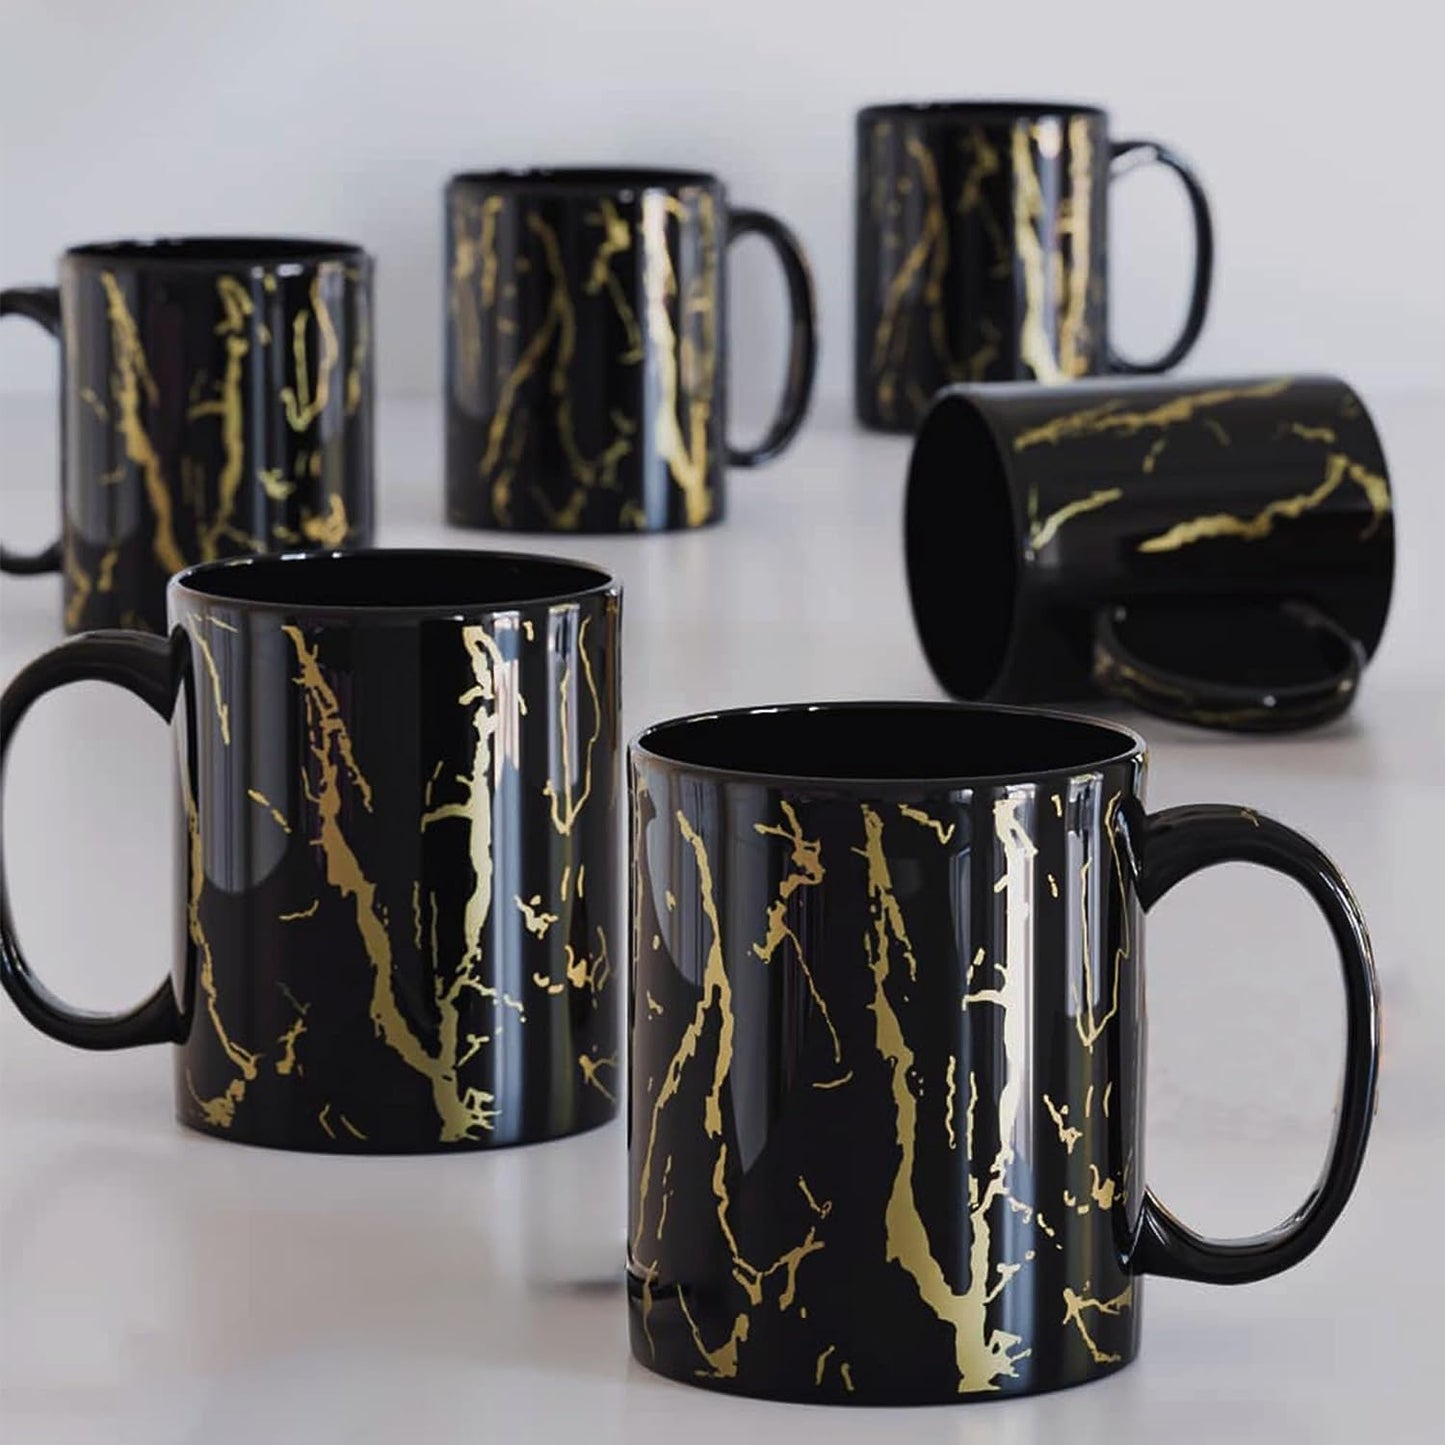 Merakrt Black Copper Pipe Coffee Mug Set- Handmade Ceramic Mugs for Tea and Coffee, Microwave Safe, Elegant Black Color Mugs, Perfect for Tea Coffee Lovers